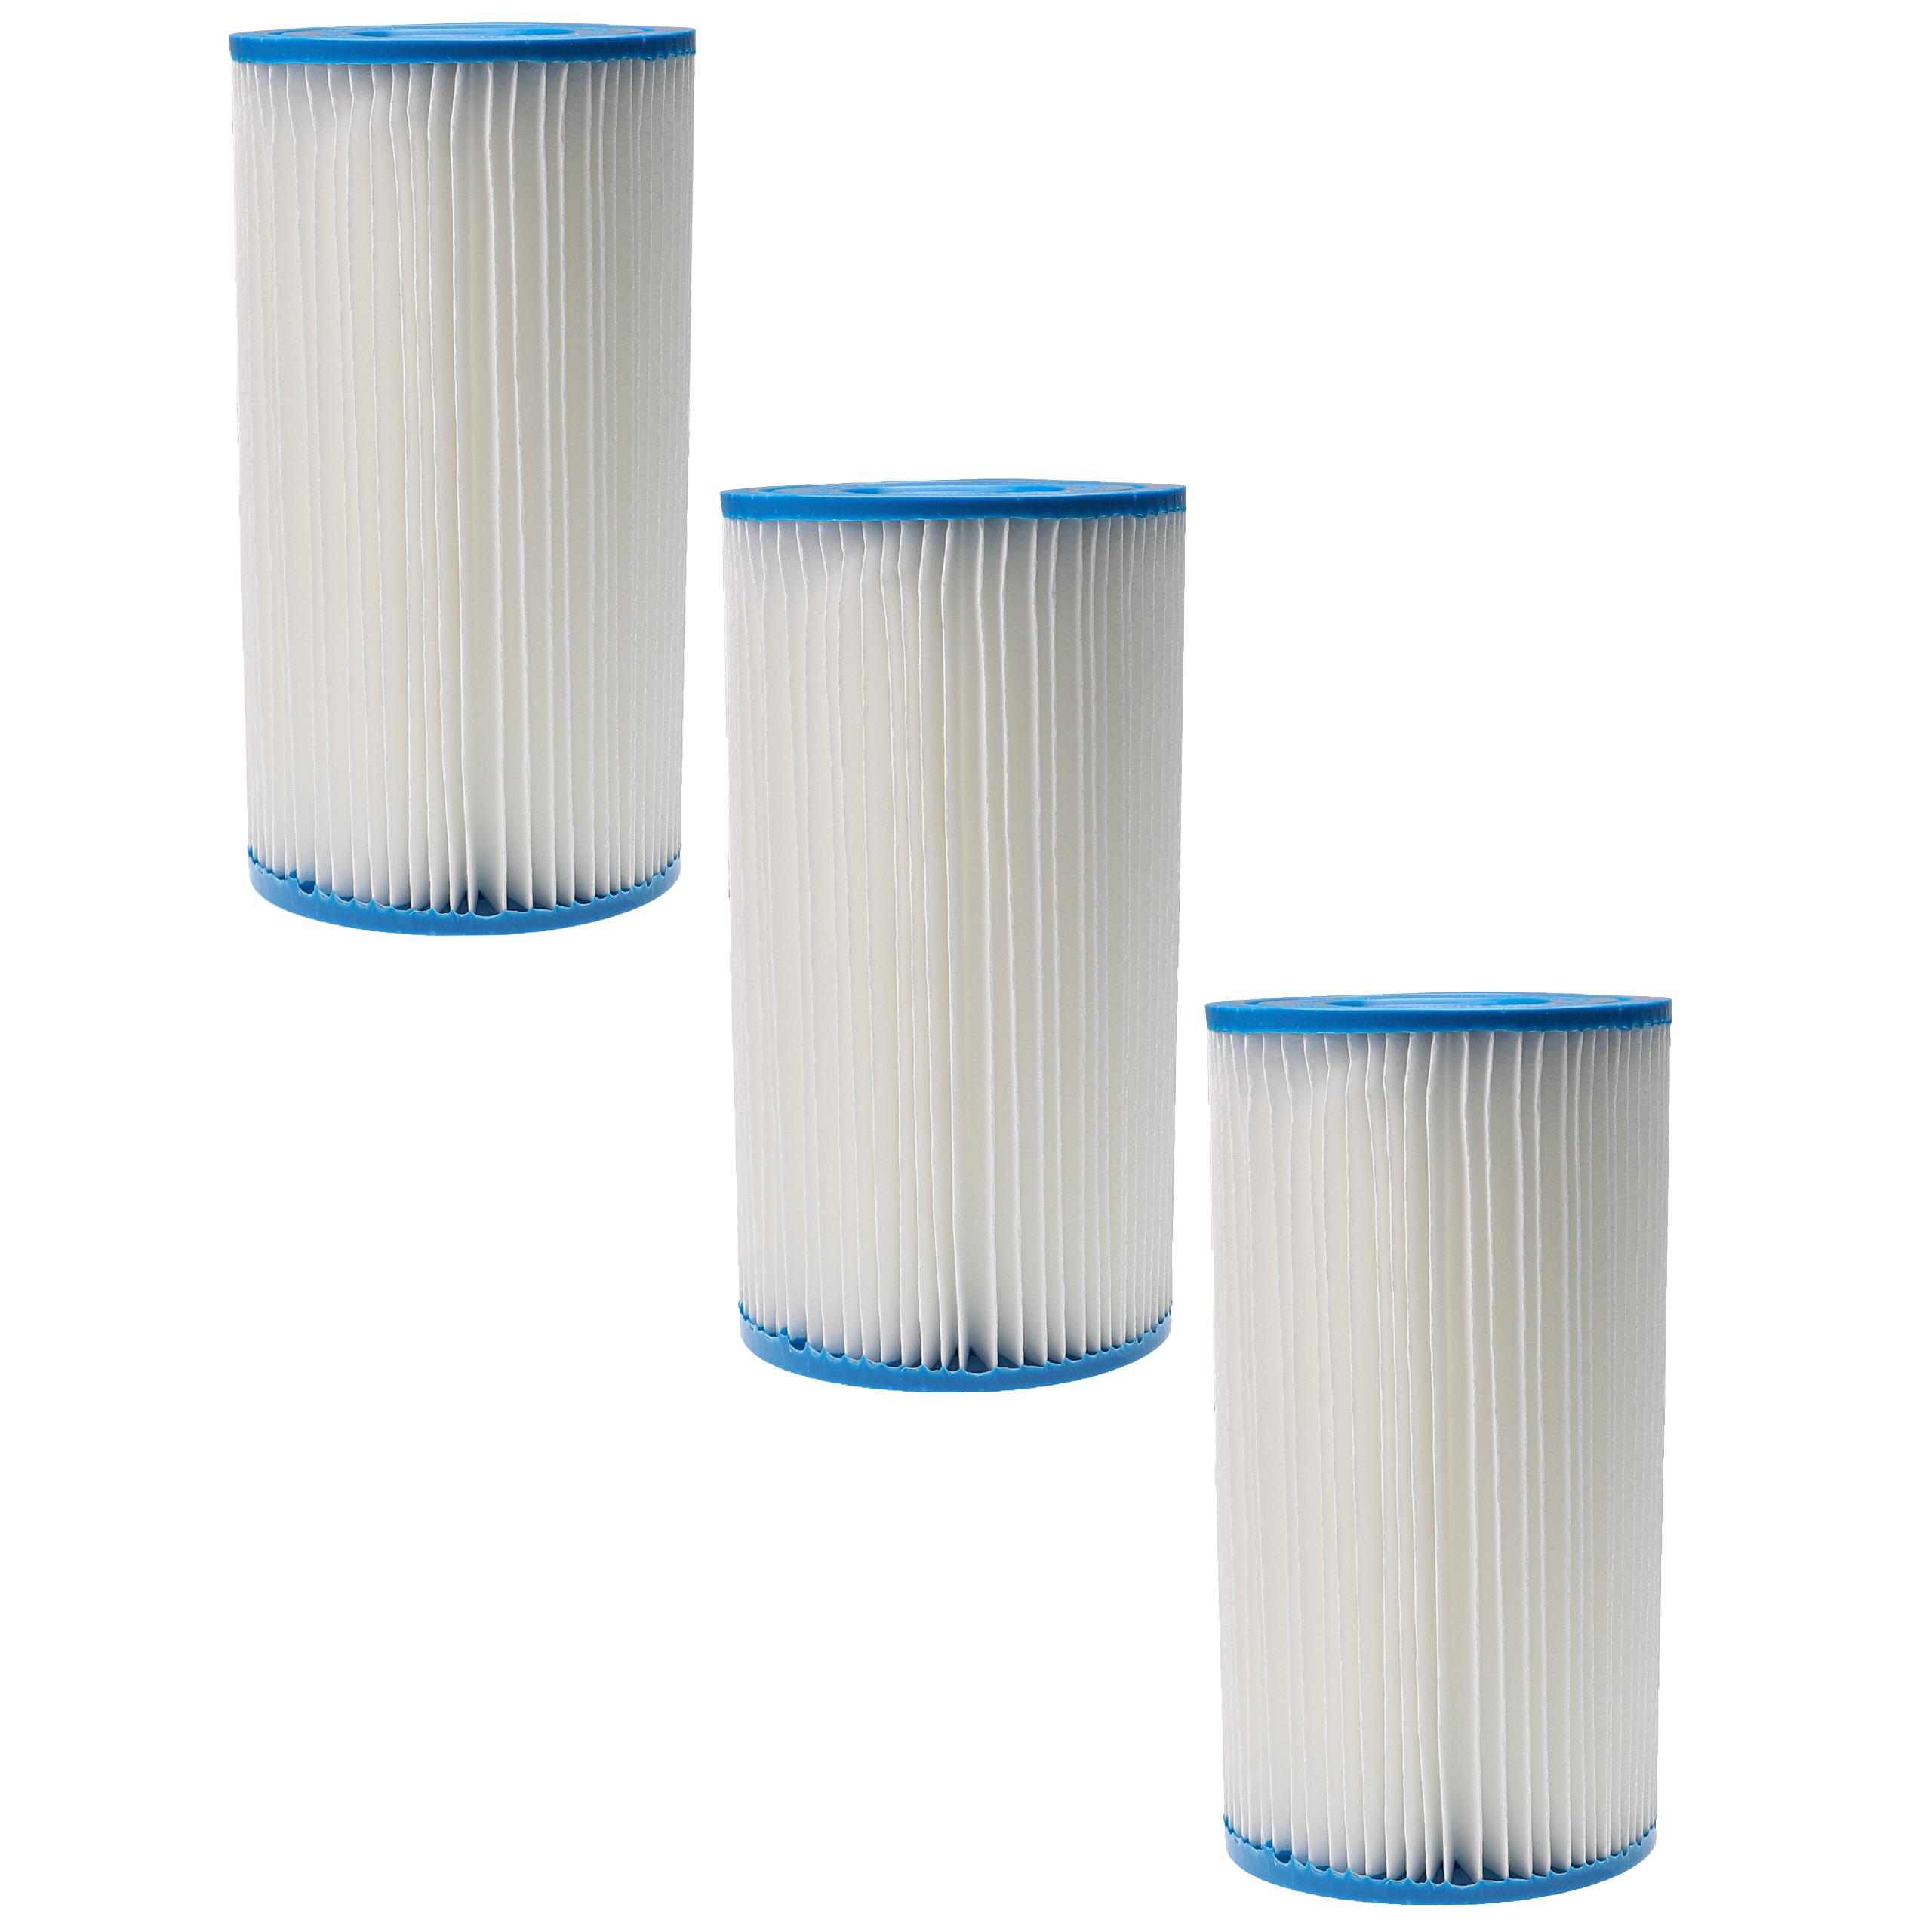 3x Wasserfilter als Ersatz für Intex Filter Typ A für Intex Swimmingpool & Filterpumpe - Filterkartusche